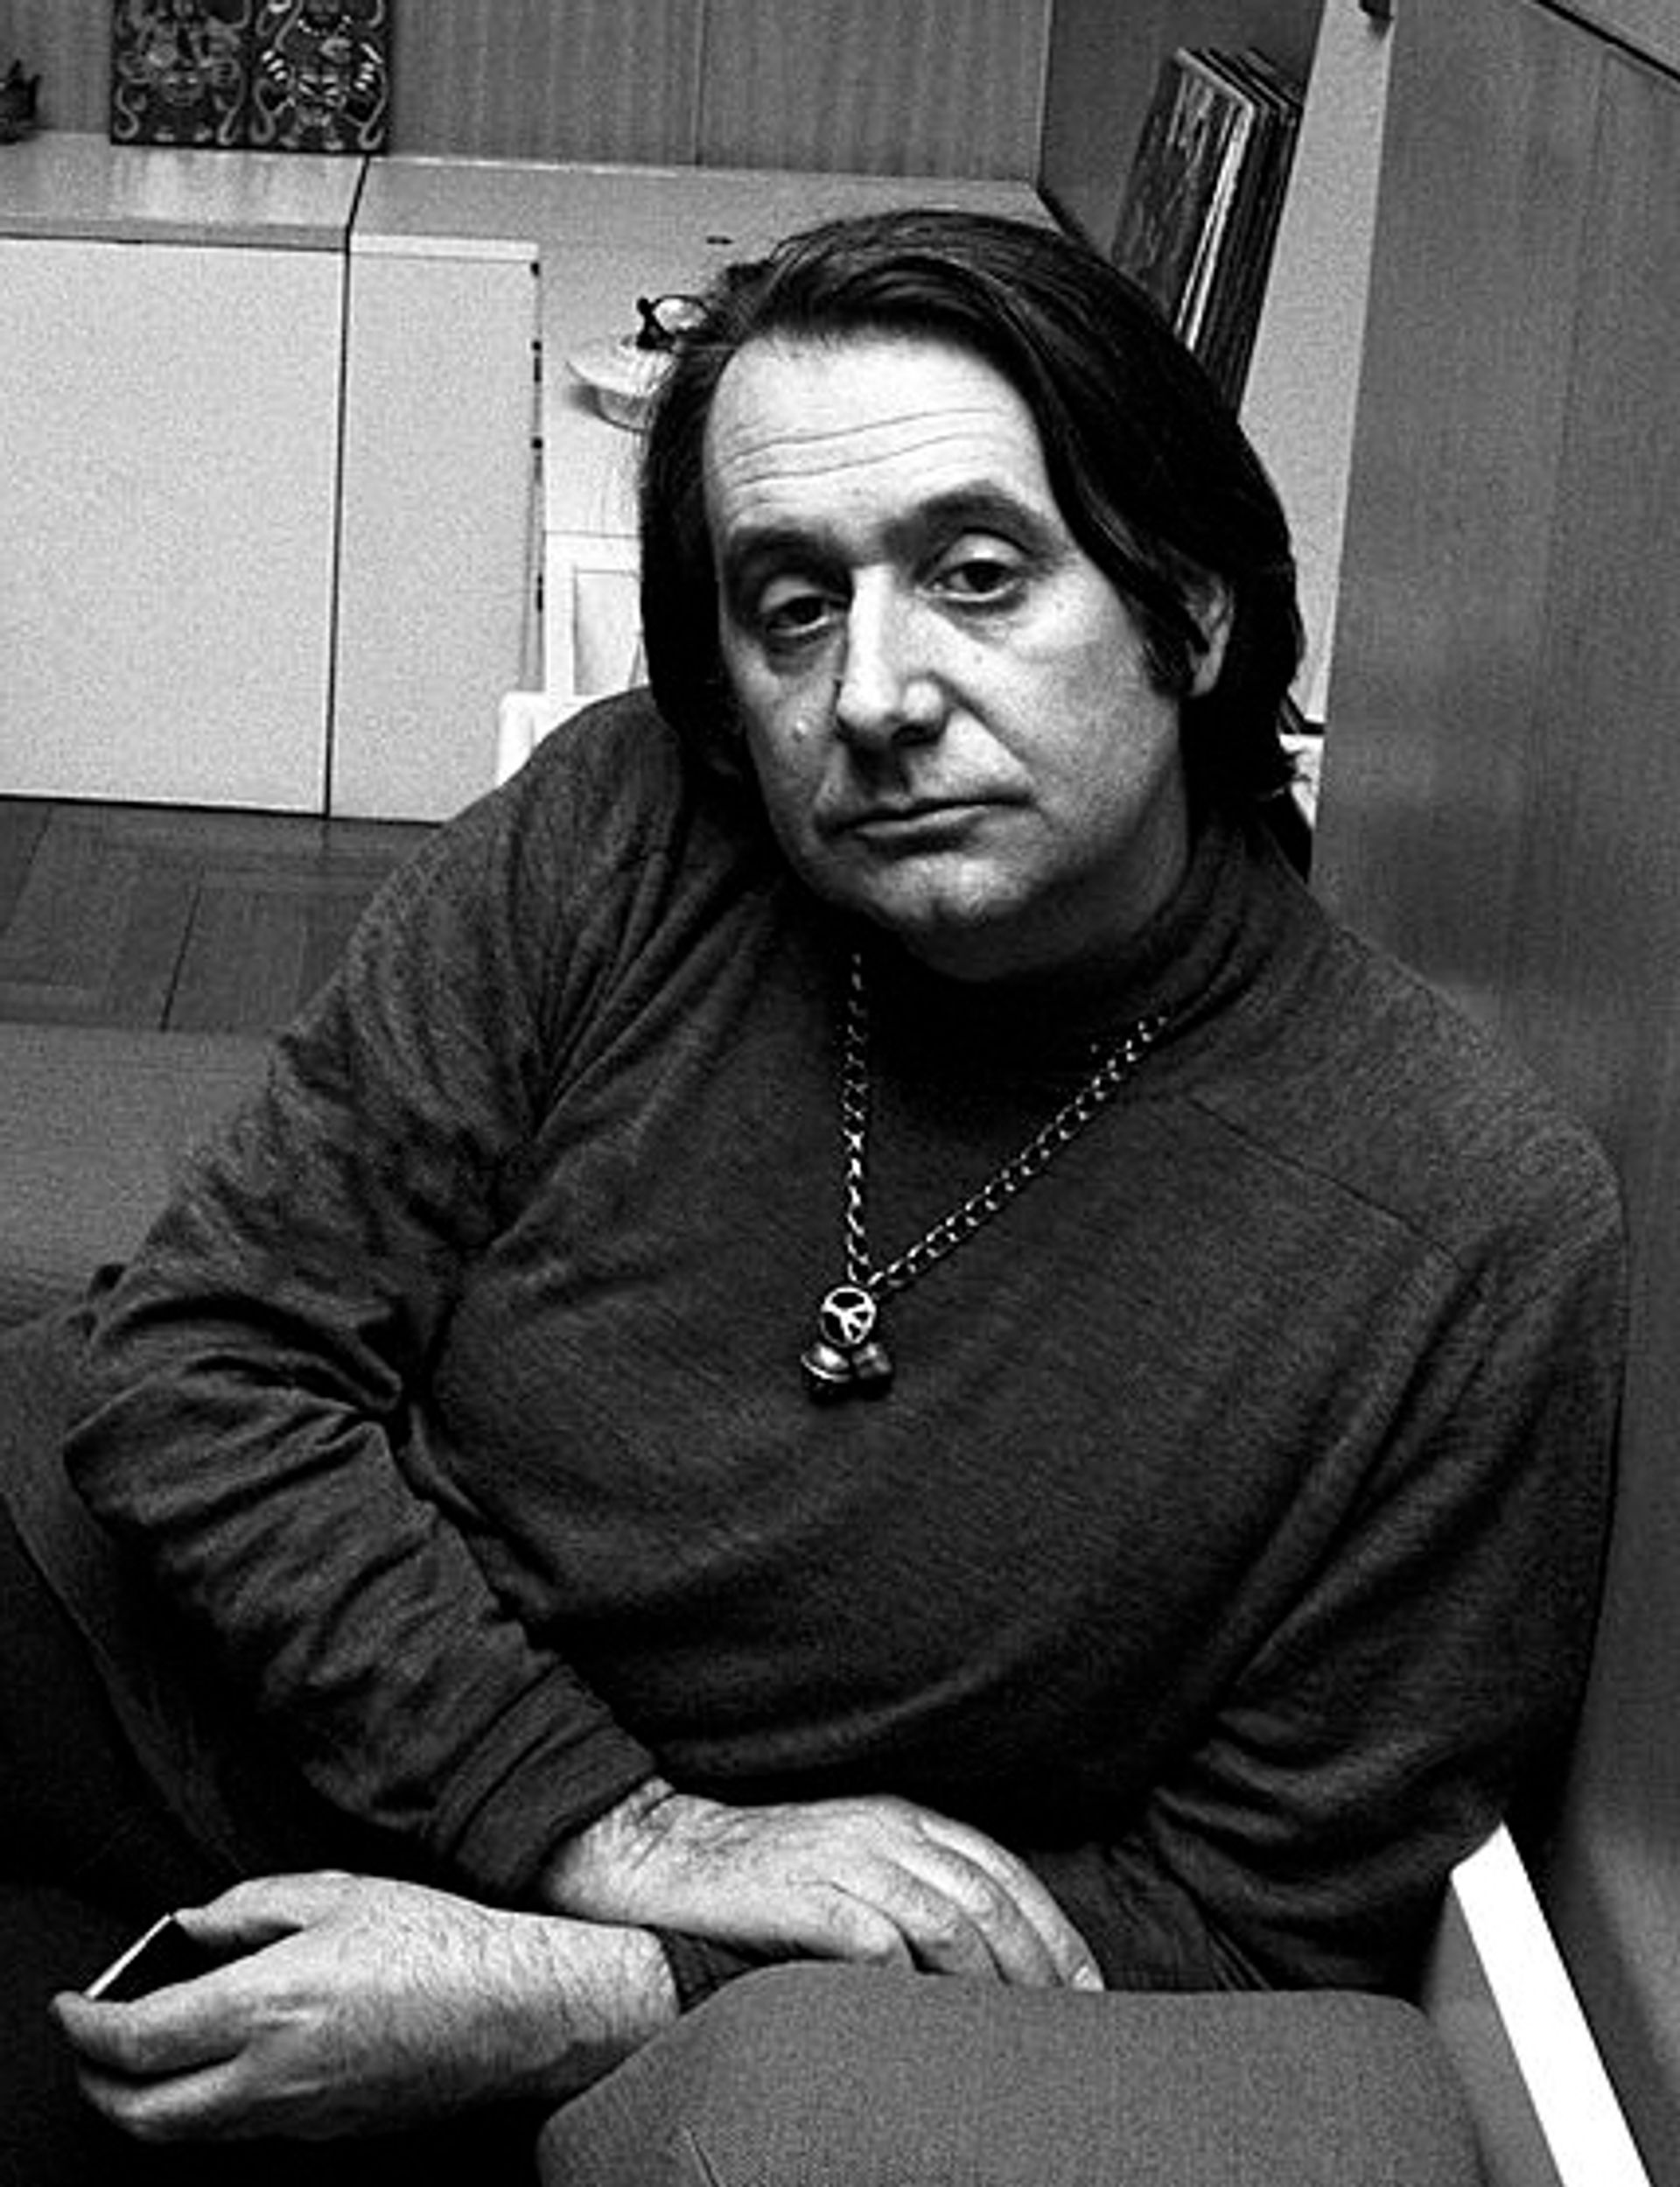 The designer Ettore Sottsass in 1969 Giuseppe Pino (Mondadori Publishers)